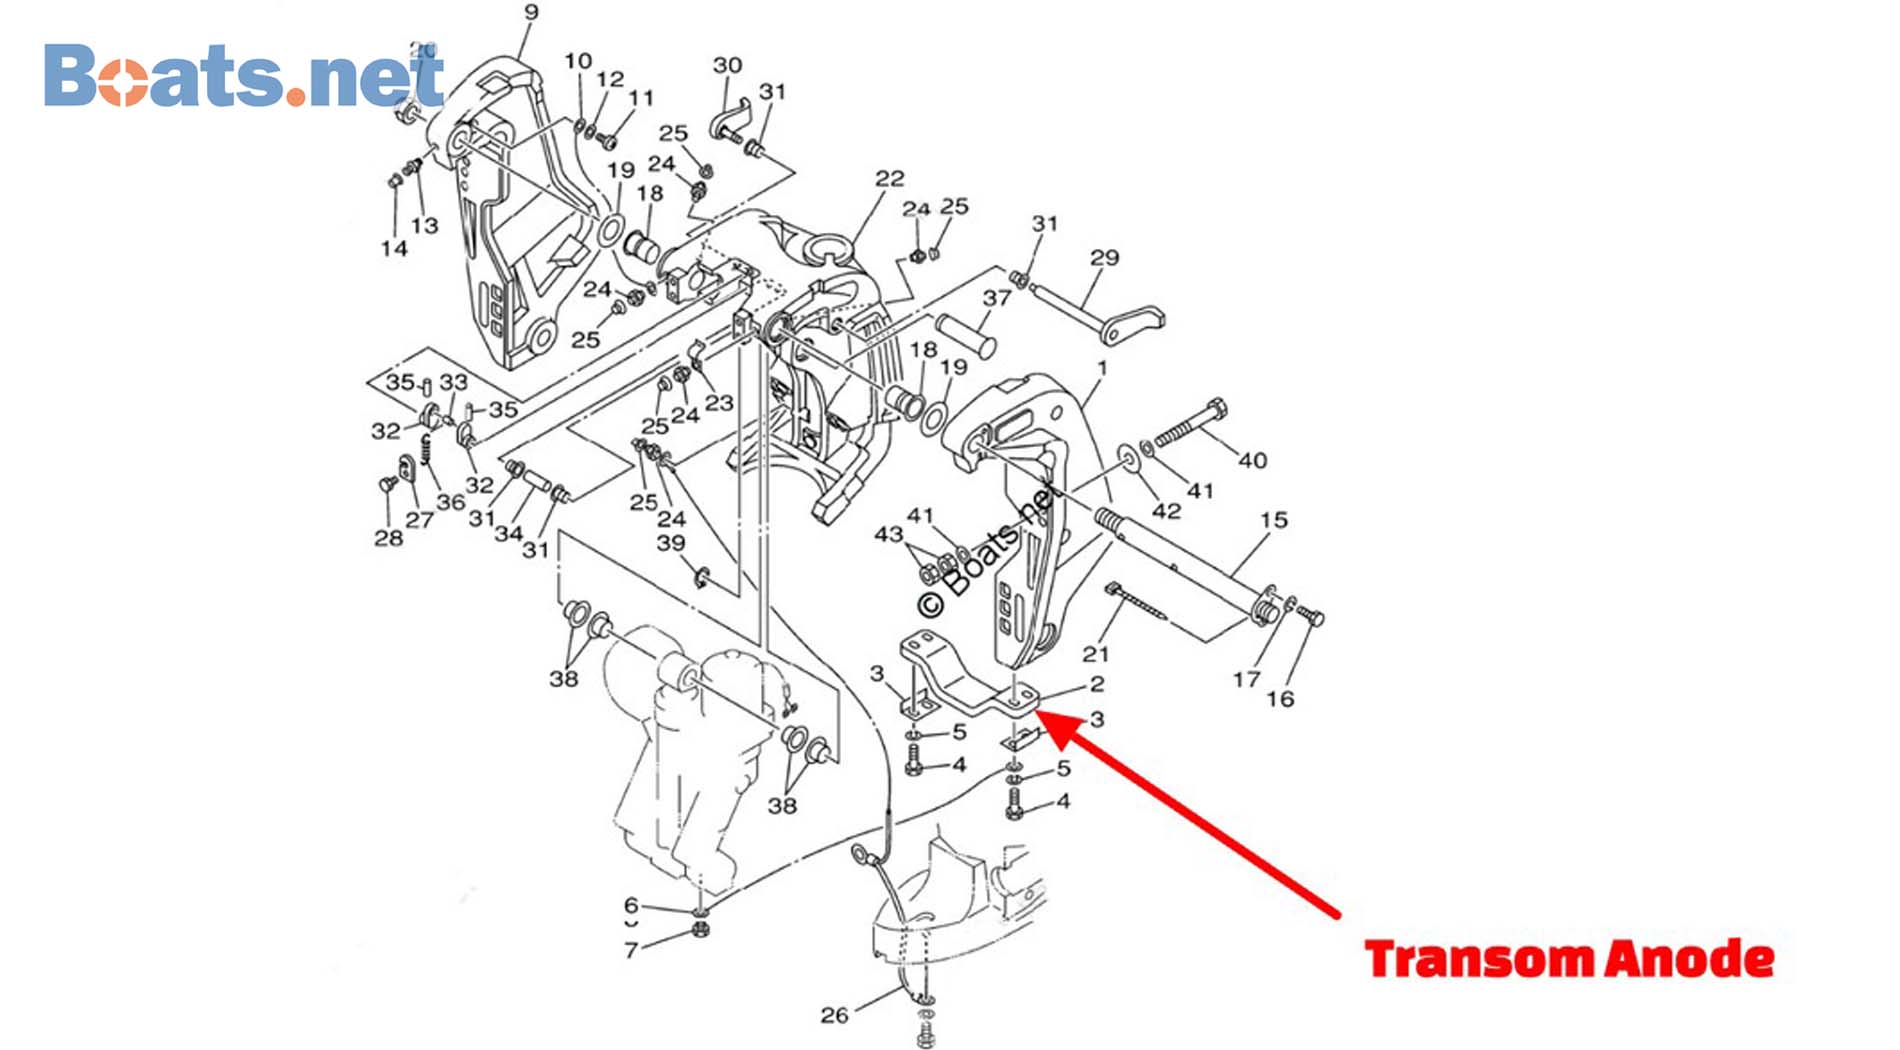 Boat motor transom anode diagram